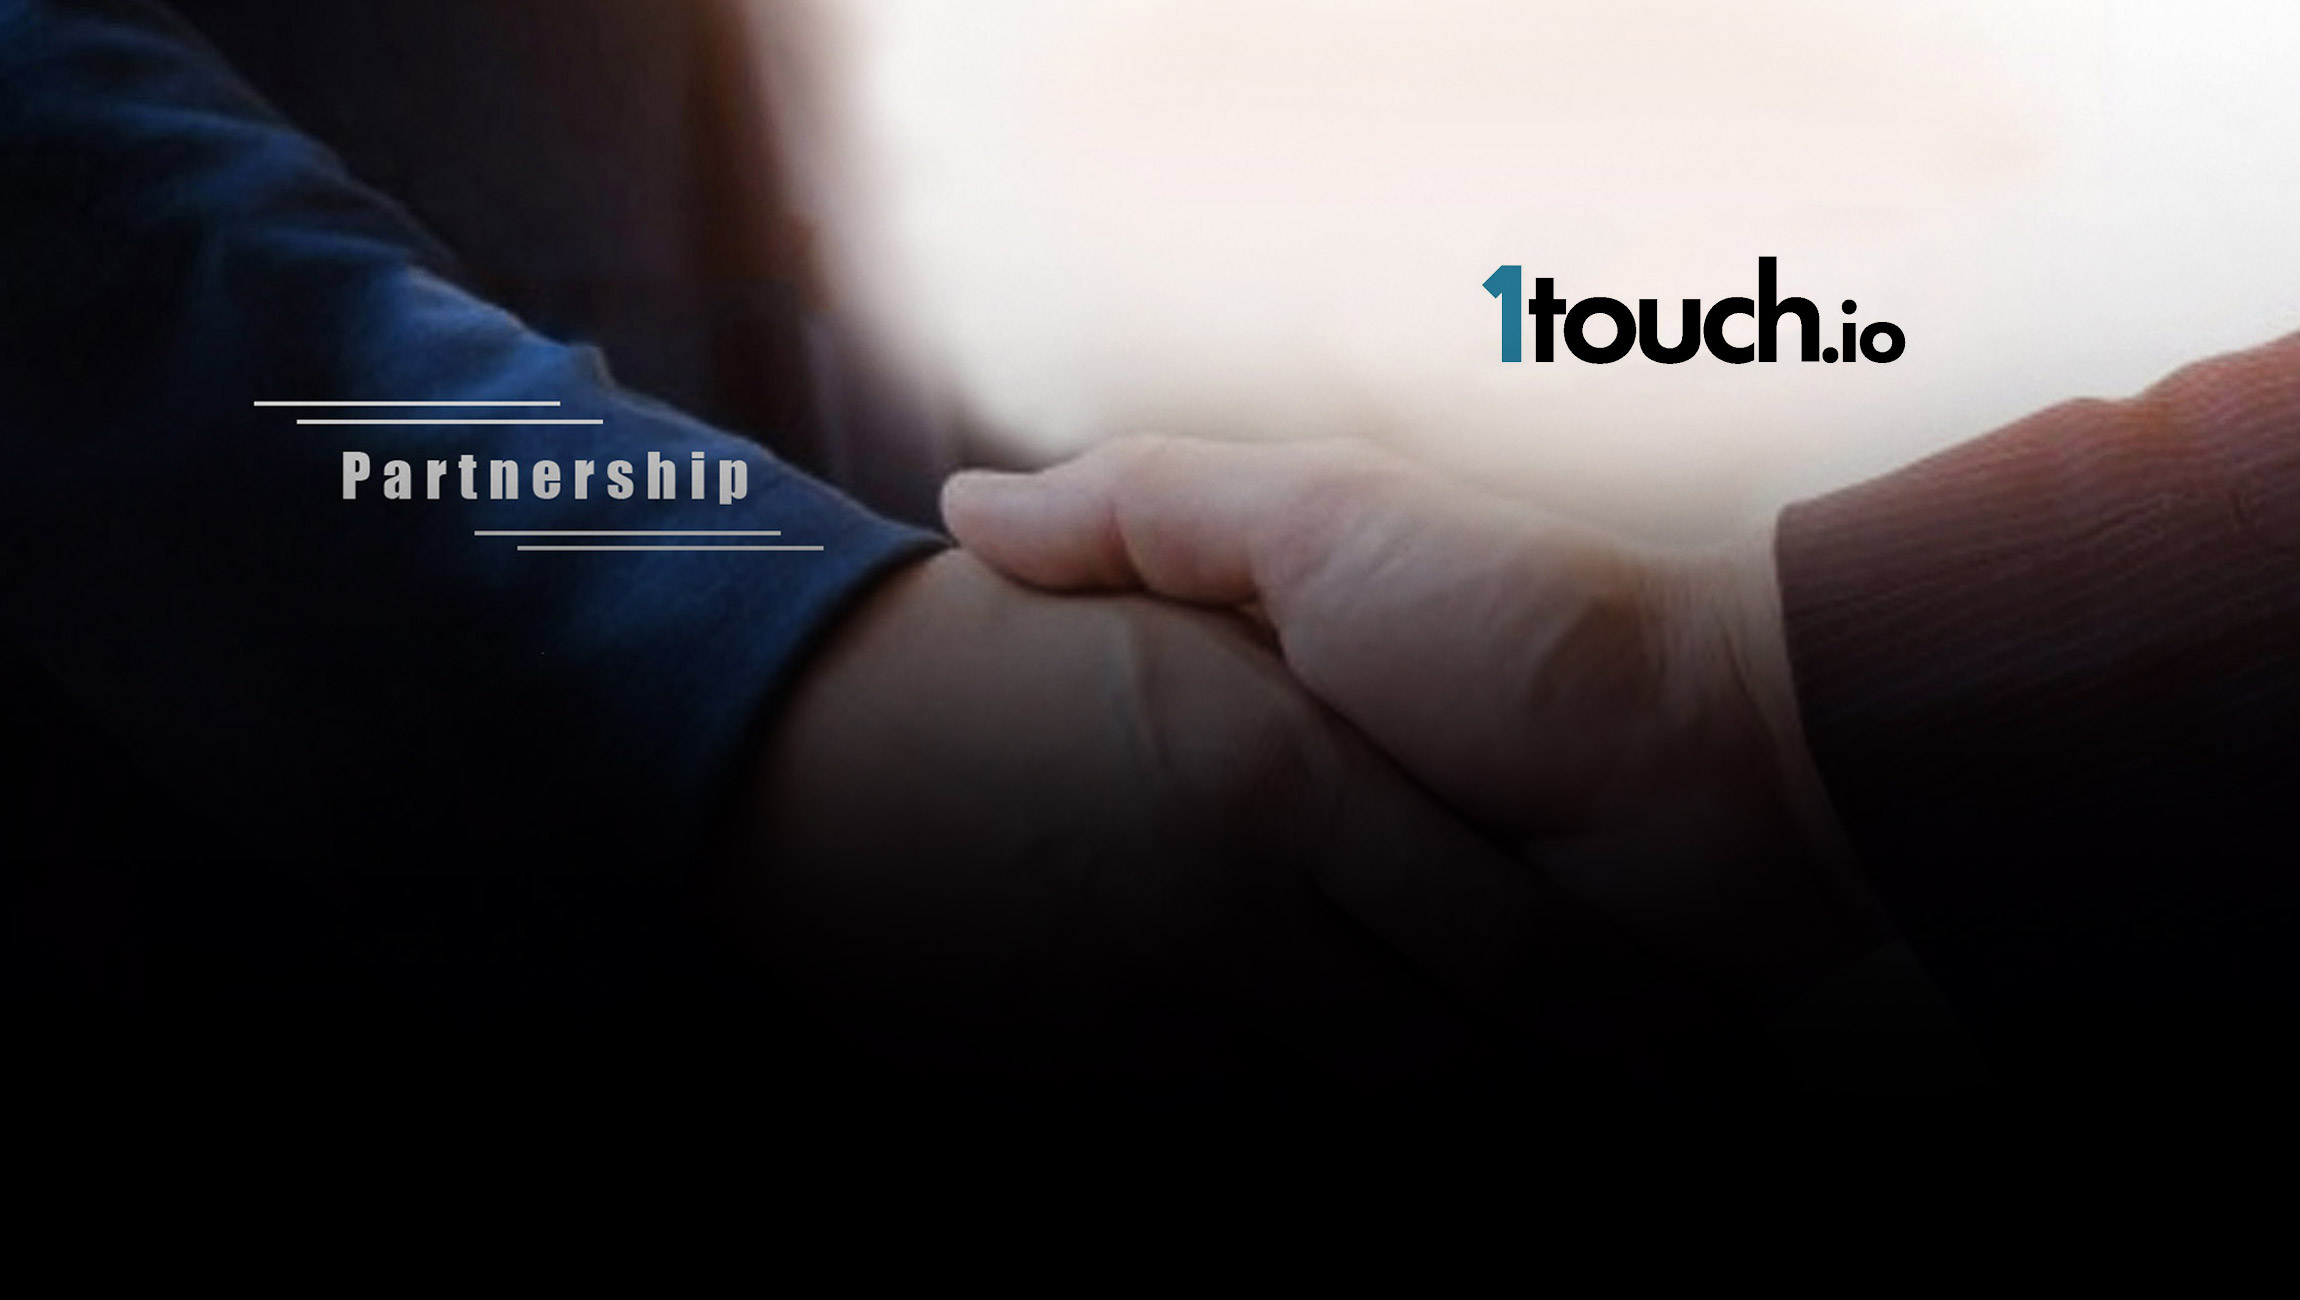 1touch.io Launches Strategic Channel Partner Program